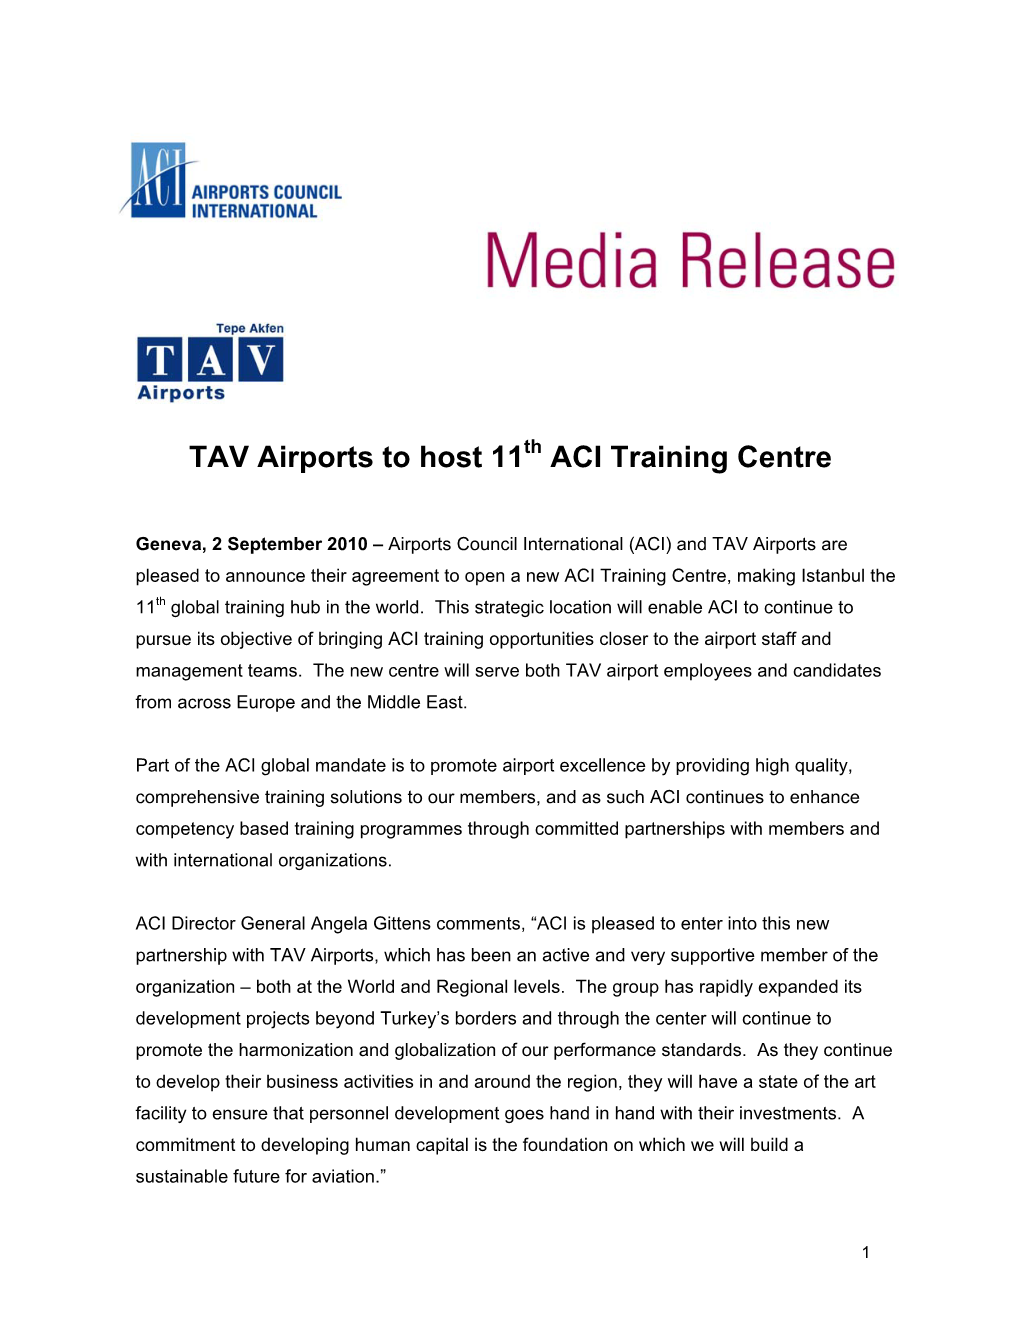 TAV Airports to Host 11 ACI Training Centre